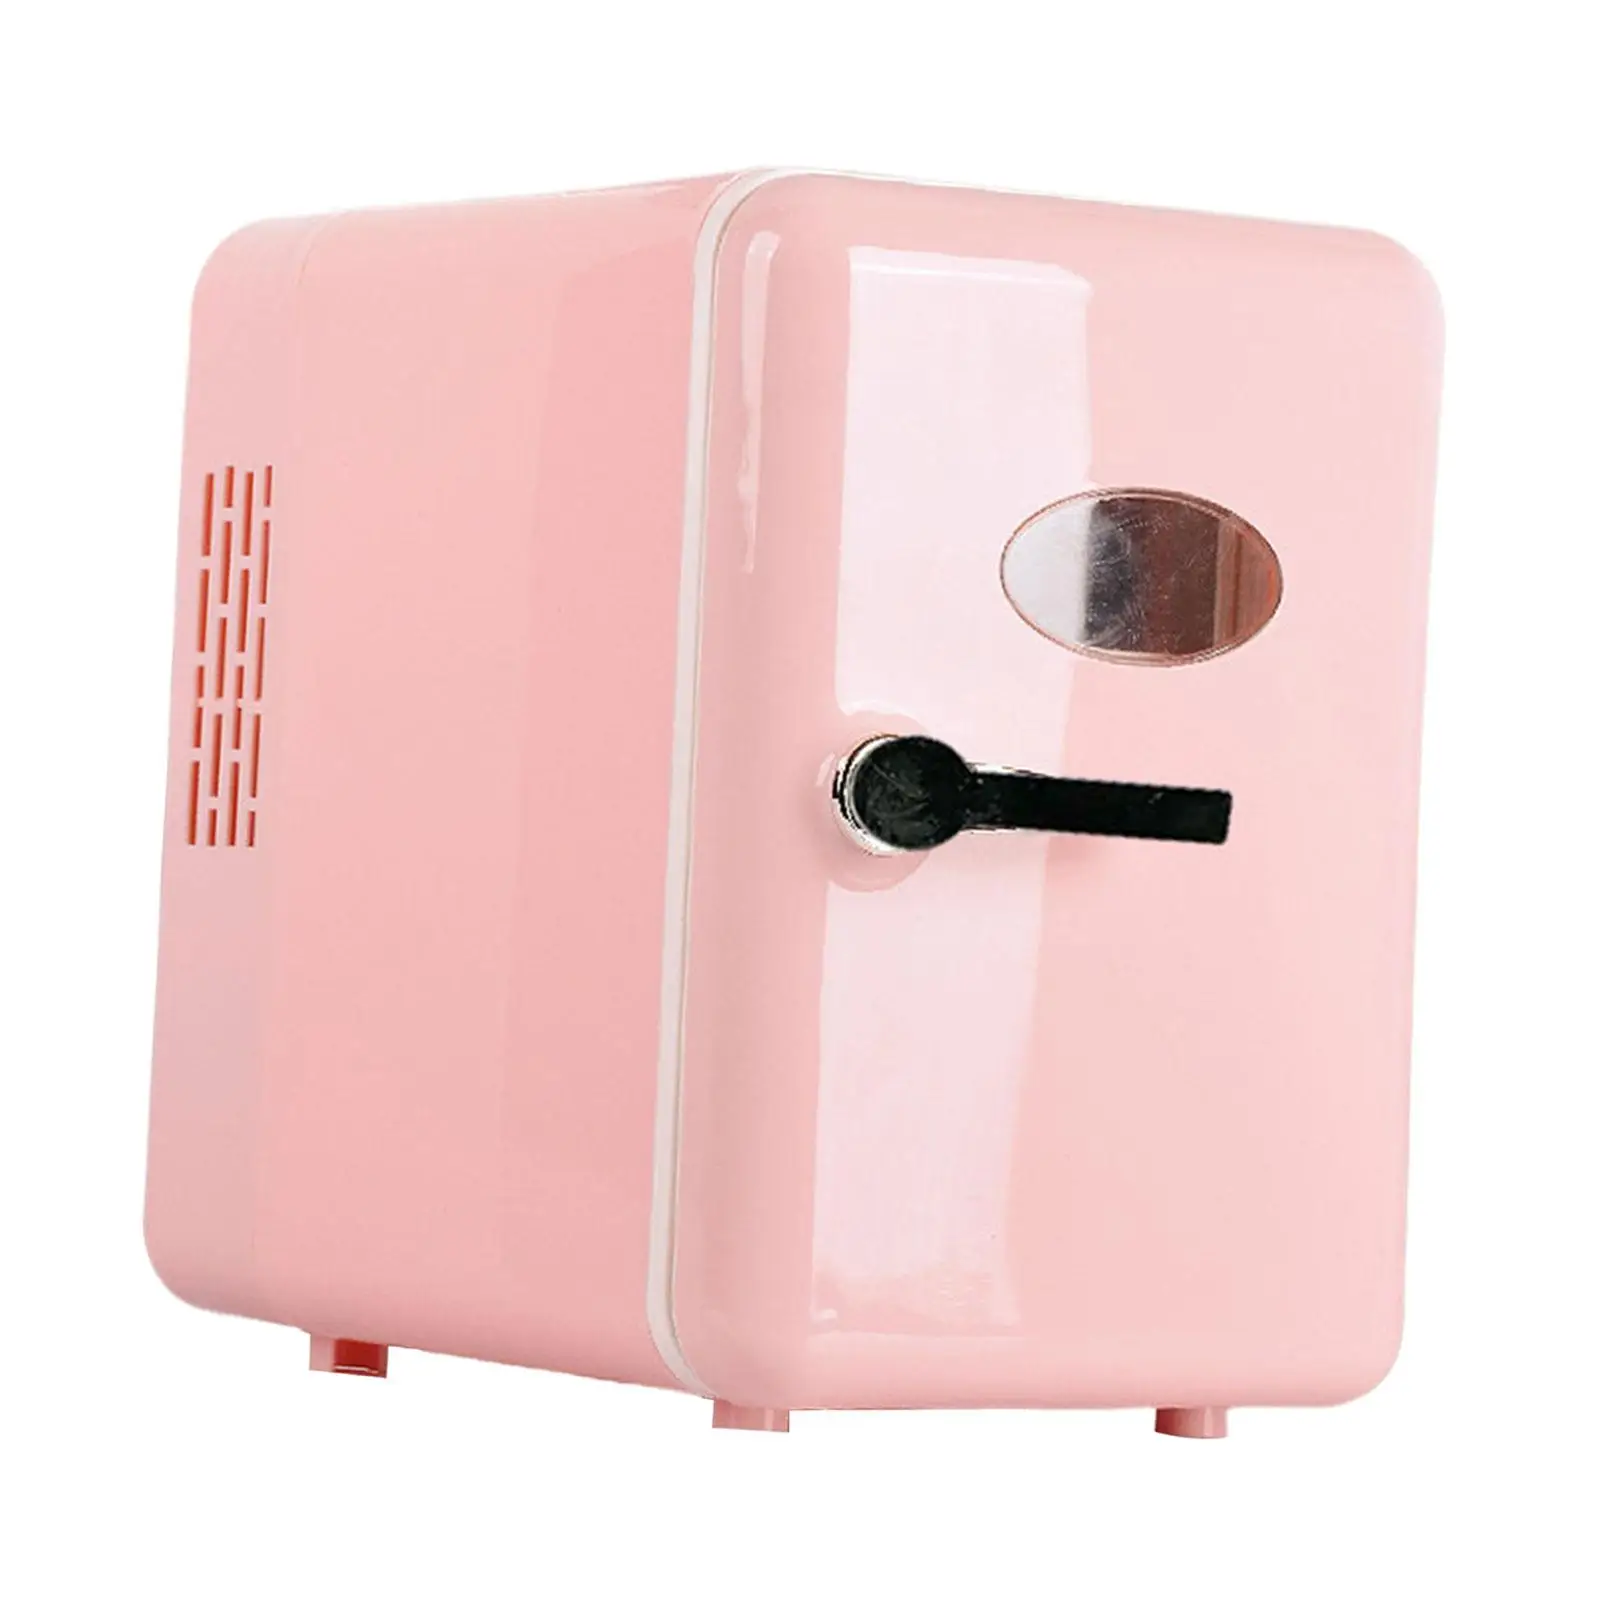 

Mini Fridge 6L Plug in Pink Car Refrigerator Portable Fridge for Car Mini Refrigerator for Foods Cosmetics Snacks Drinks Bedroom